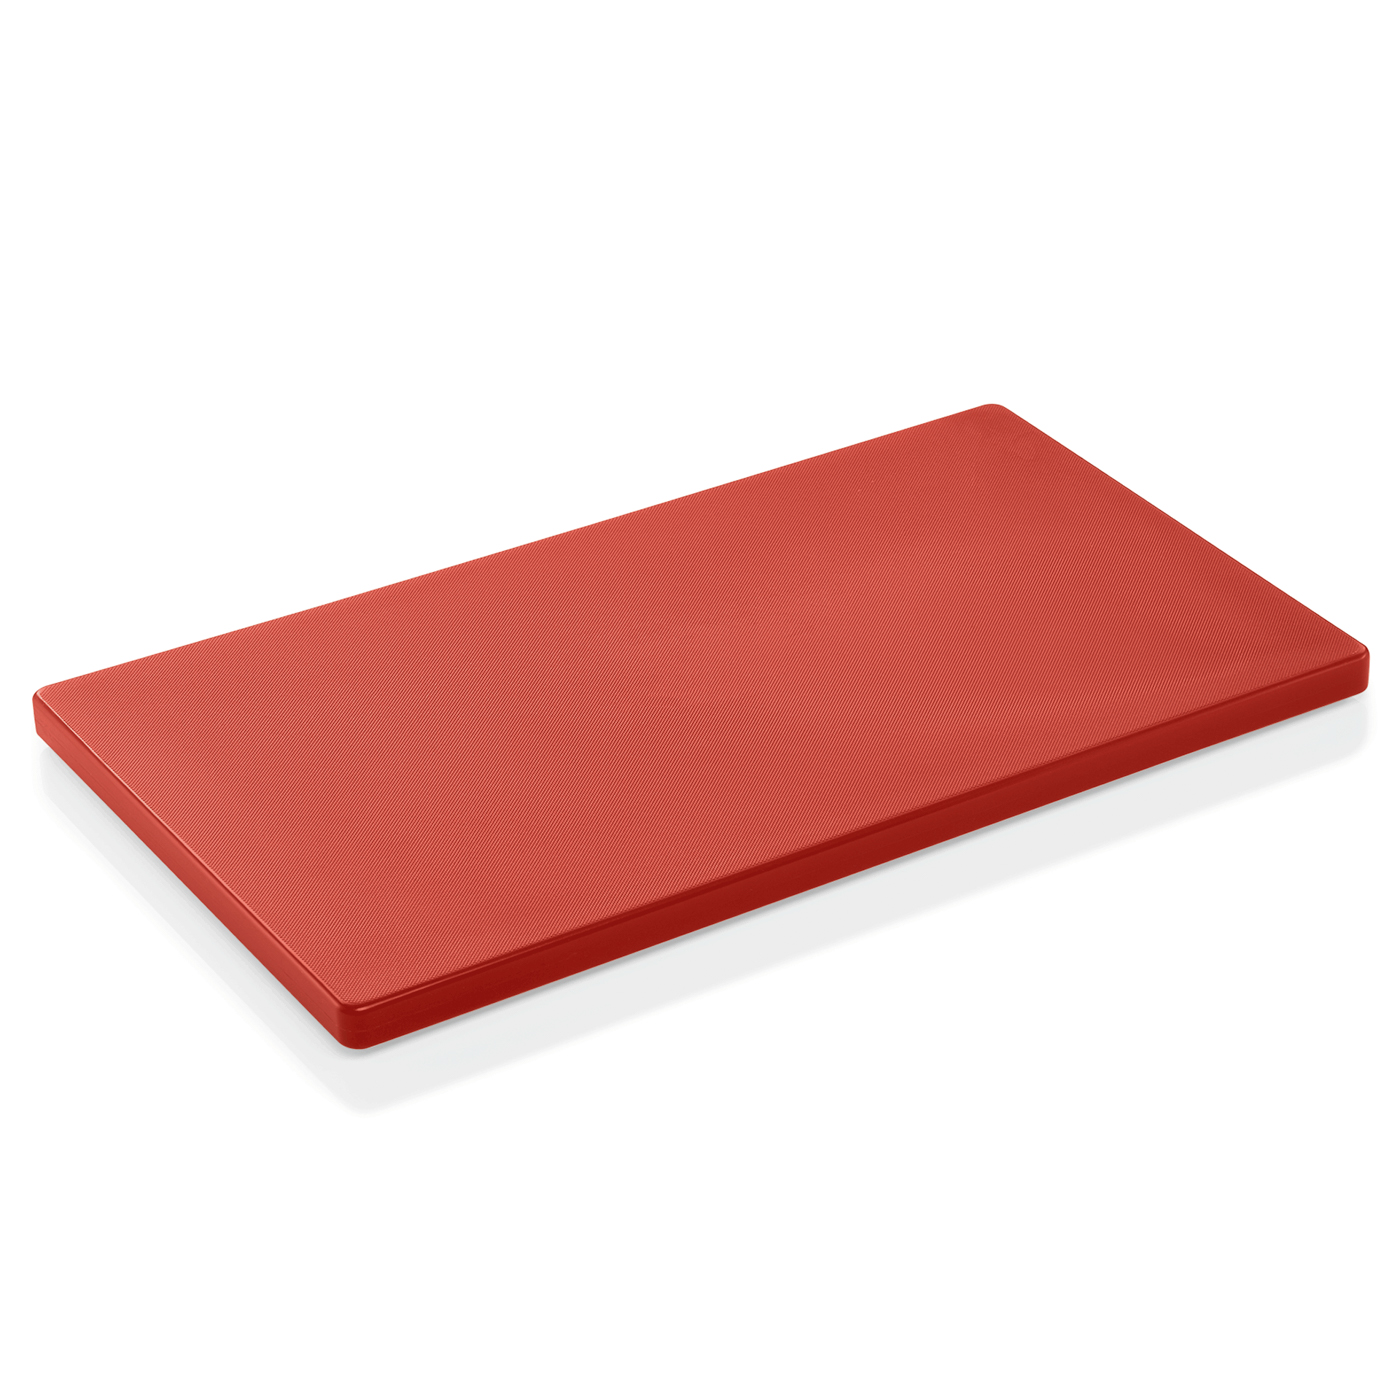 GN 1/1 HACCP Schneidbrett, Material: Polyethylen. Farbe: rot. Maße: Höhe: 20 mm